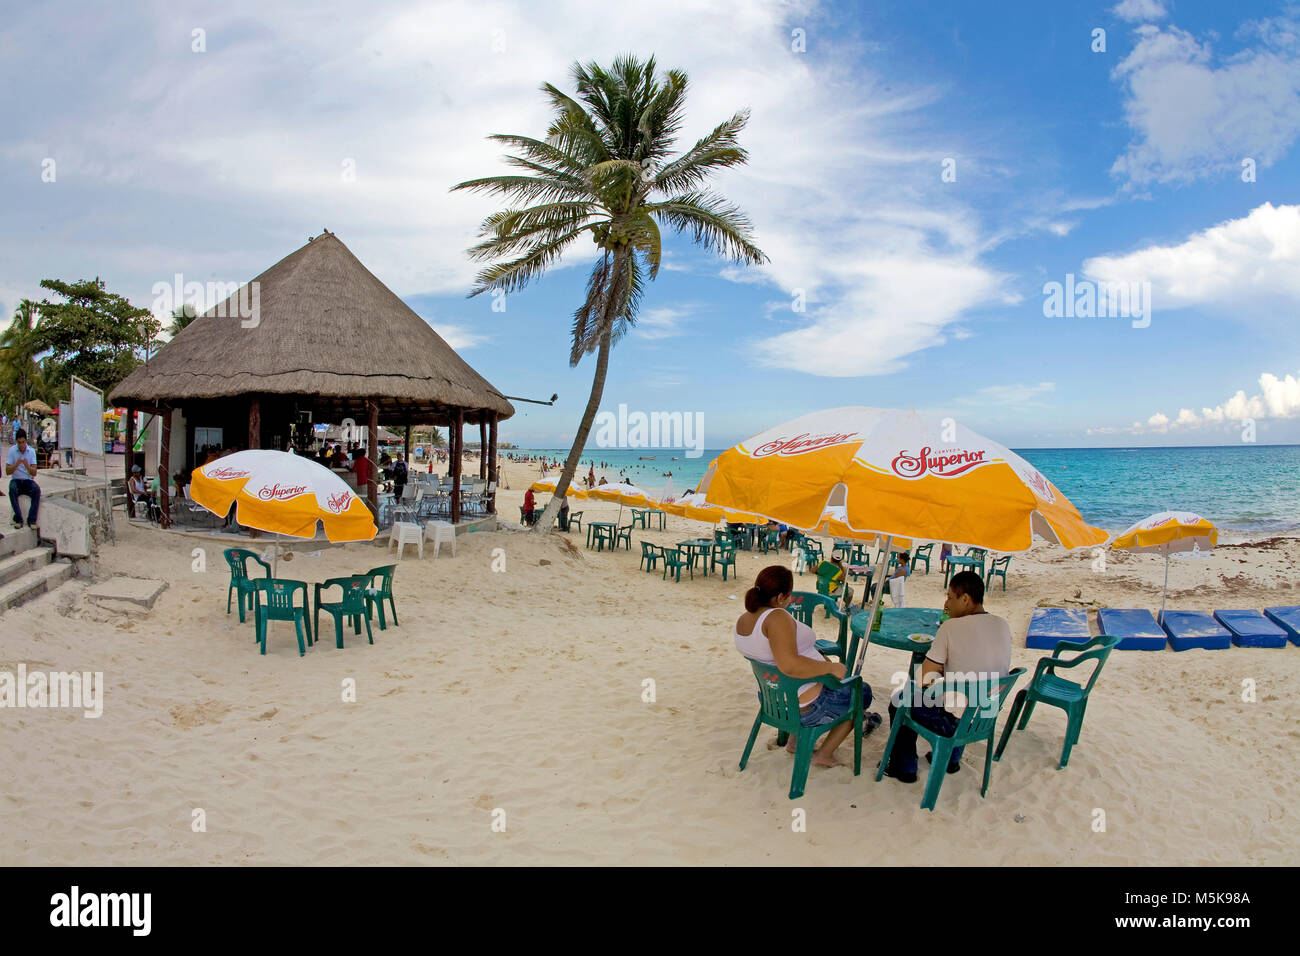 Die Strandbar am Strand von Playa del Carmen, Playa Del Carmen, Mexiko, Karibik | Strand Bar am Strand von Playa del Carmen, Mexiko, Karibik Stockfoto